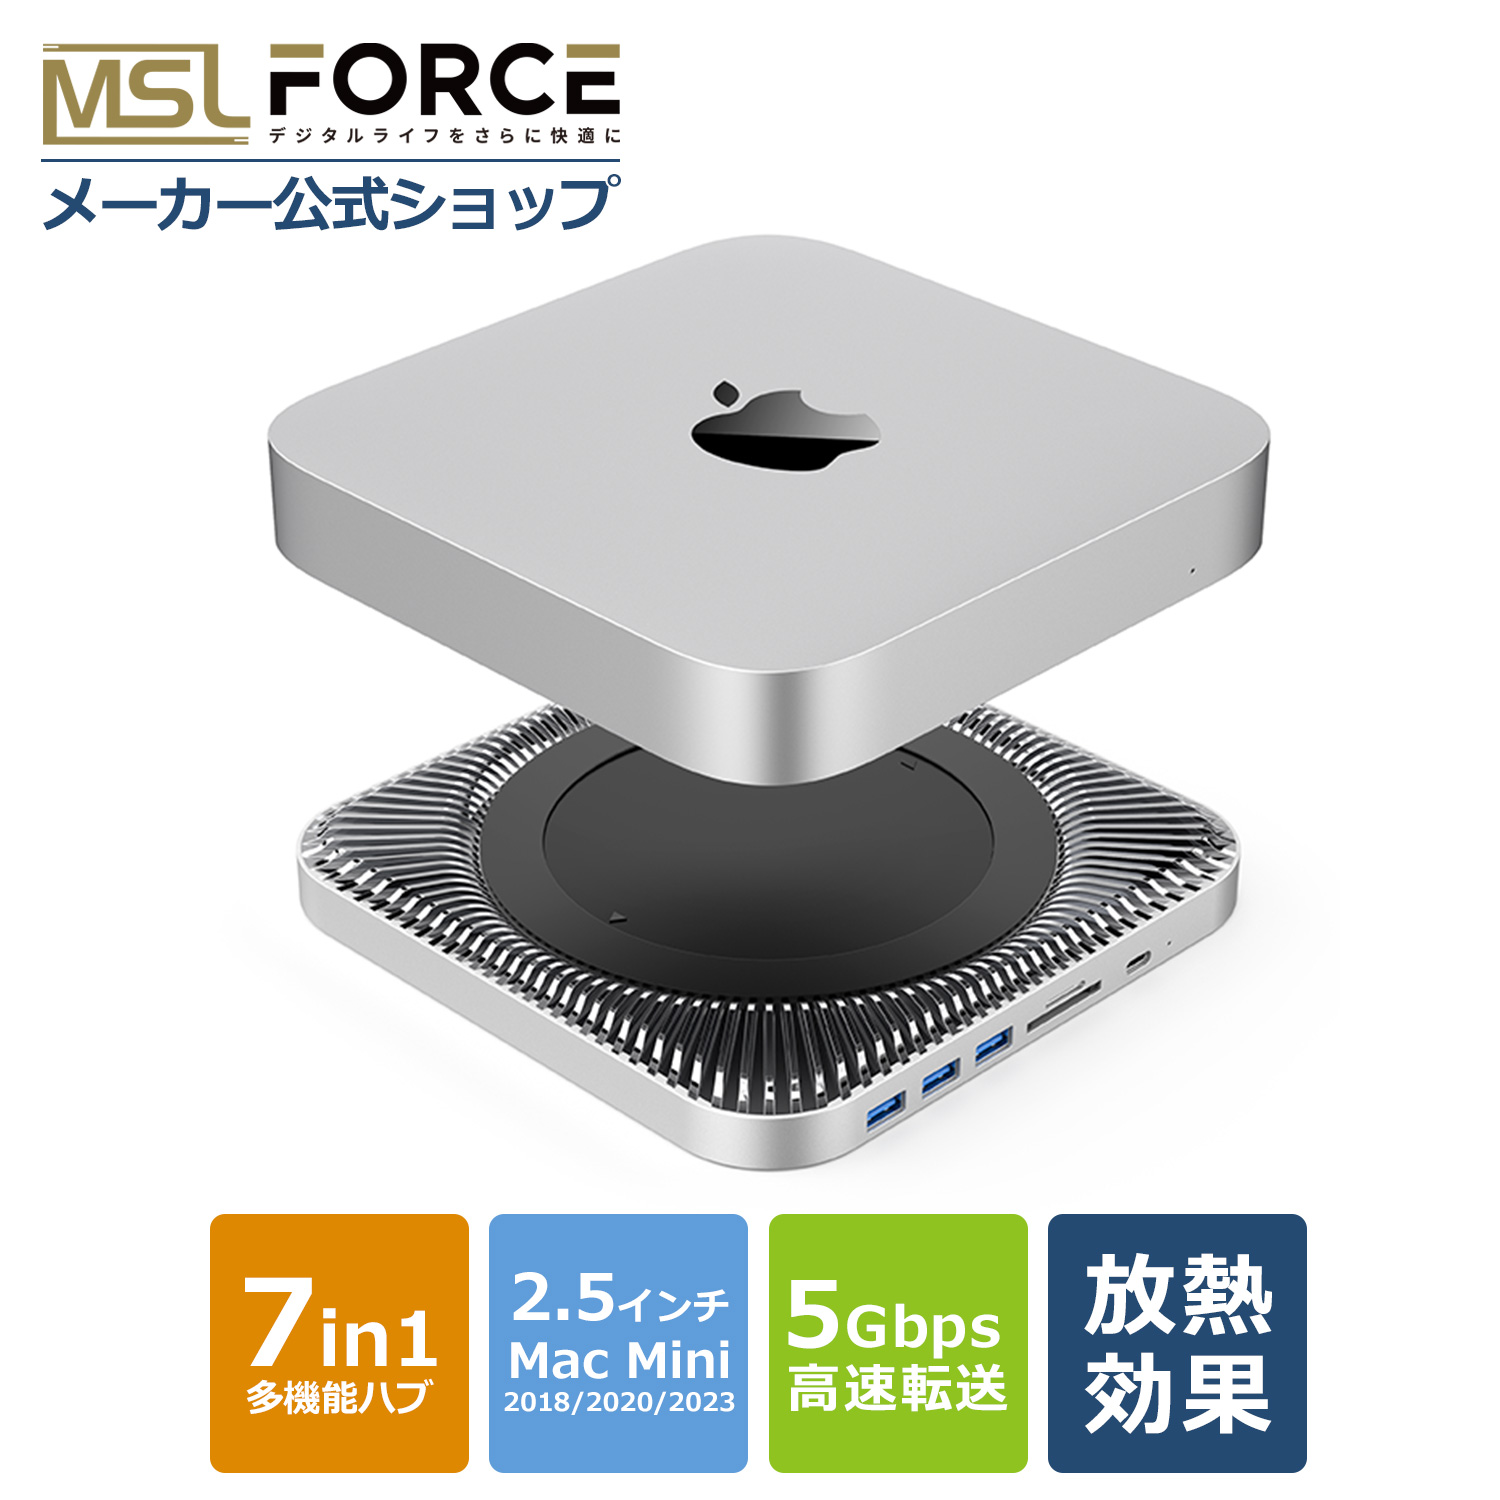 Mac Mini用ハブ 7in1 放熱設計 Mac mini用スタンド USB3.0 micro SD